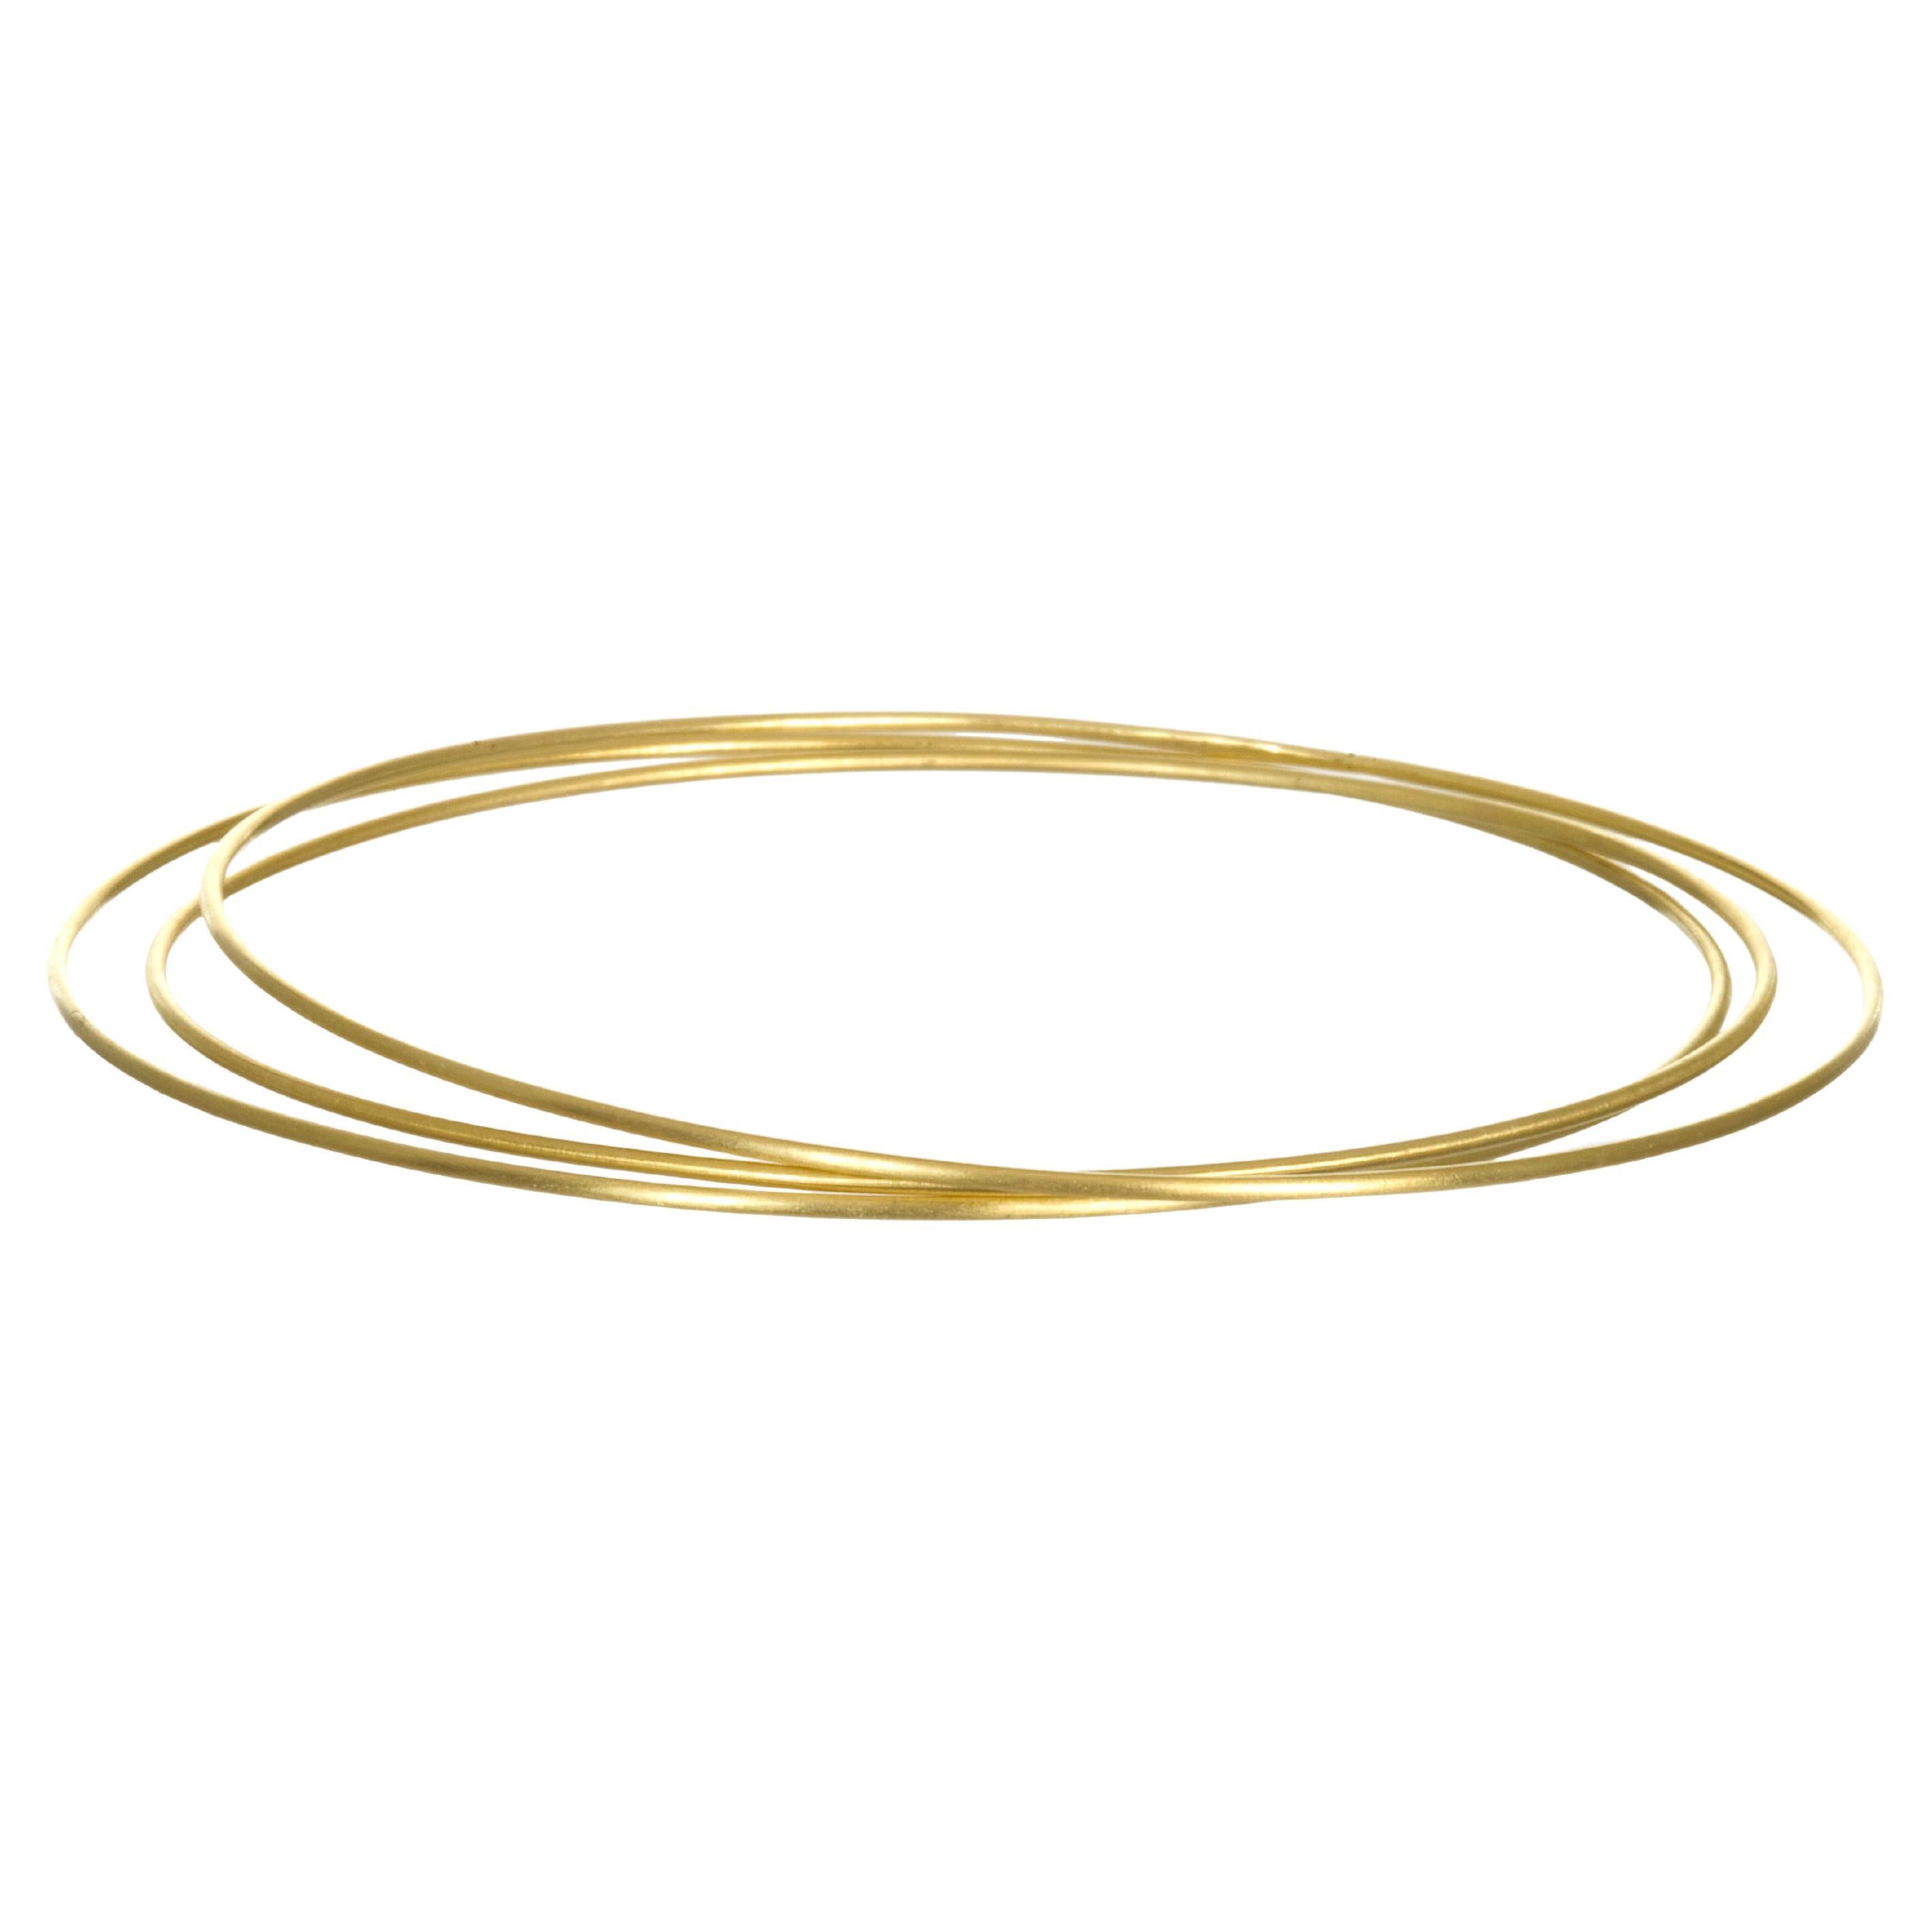 Faye Kim 18 Karat Gold Wire Bangle Bracelet, Each Sold Individually